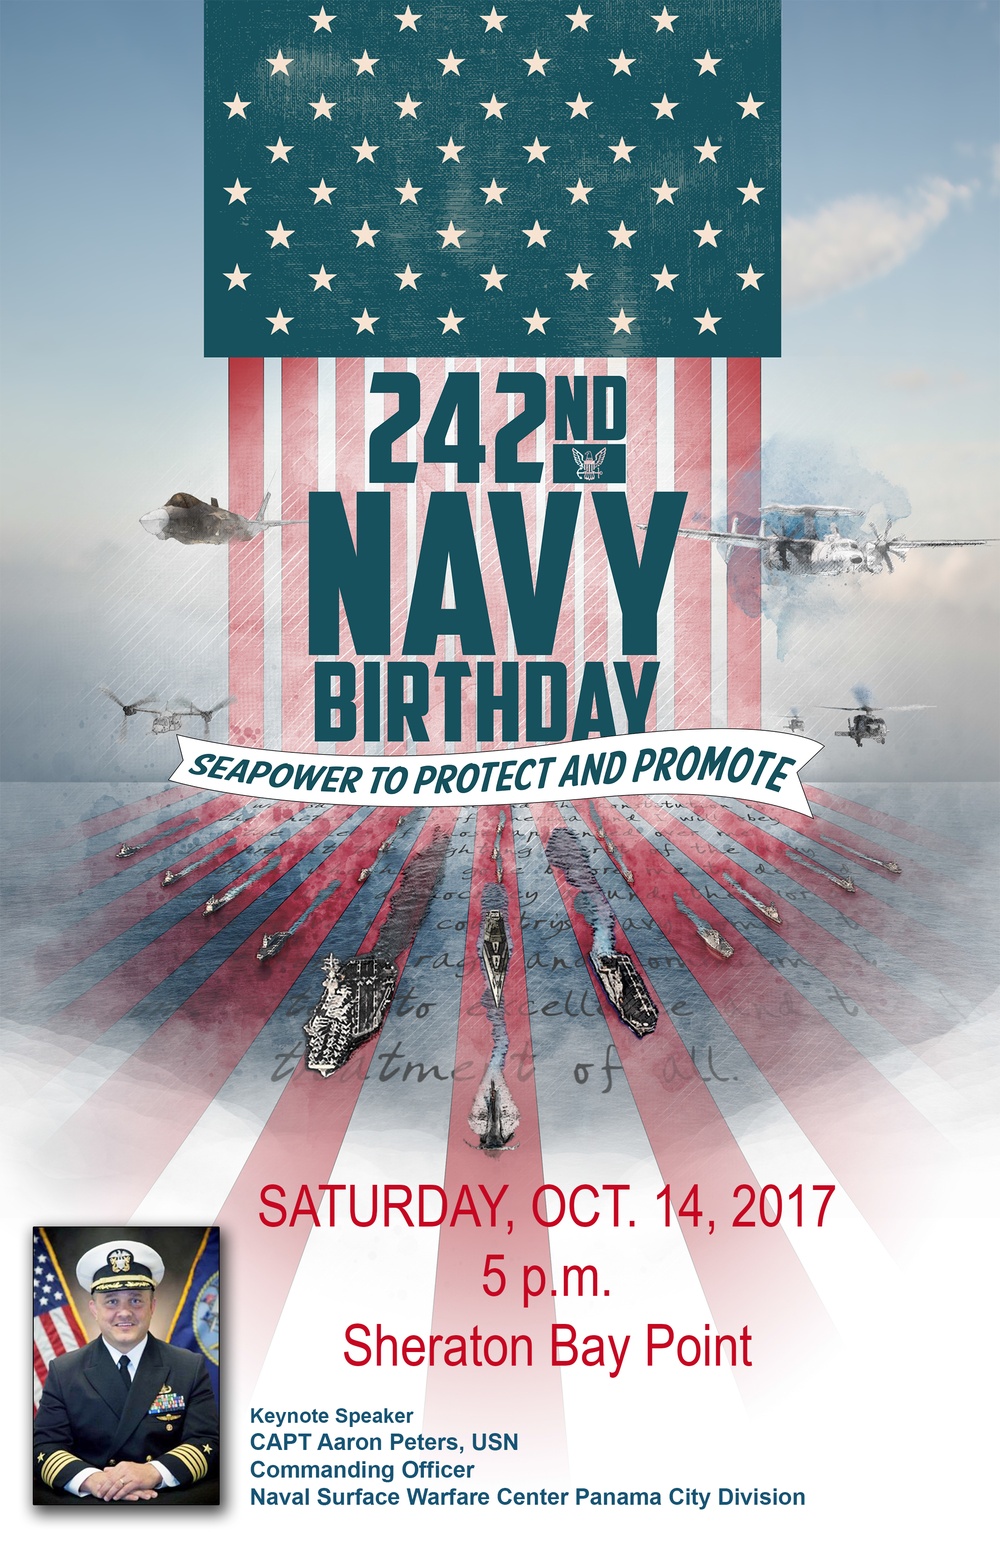 Navy Celebrates 242nd Birthday, Peters Serves as Keynote